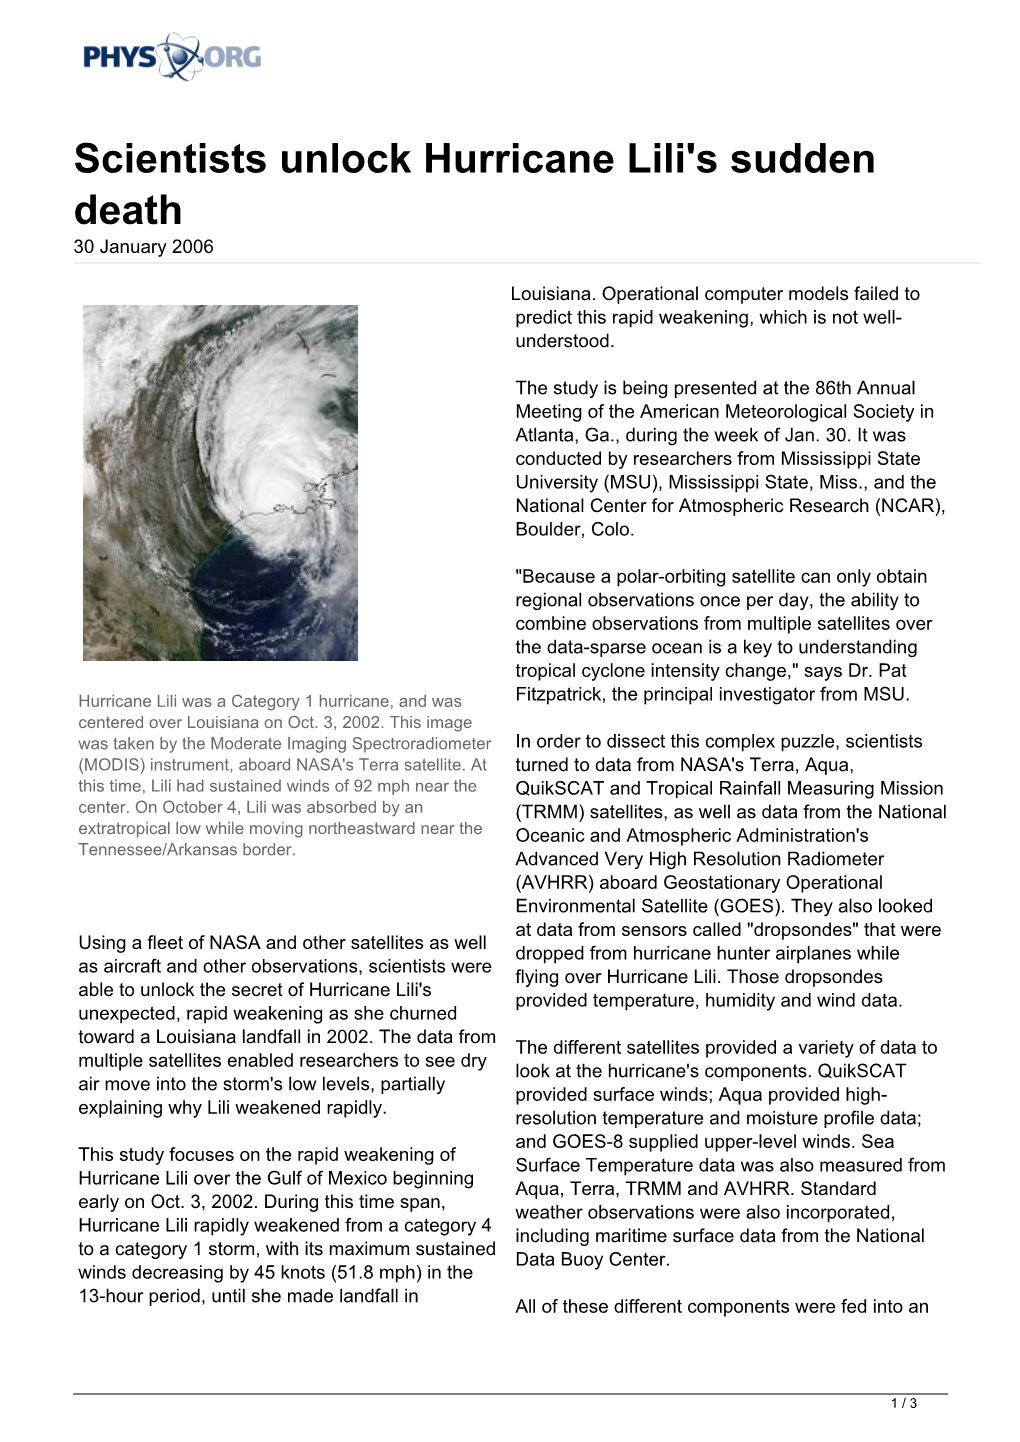 Scientists Unlock Hurricane Lili's Sudden Death 30 January 2006